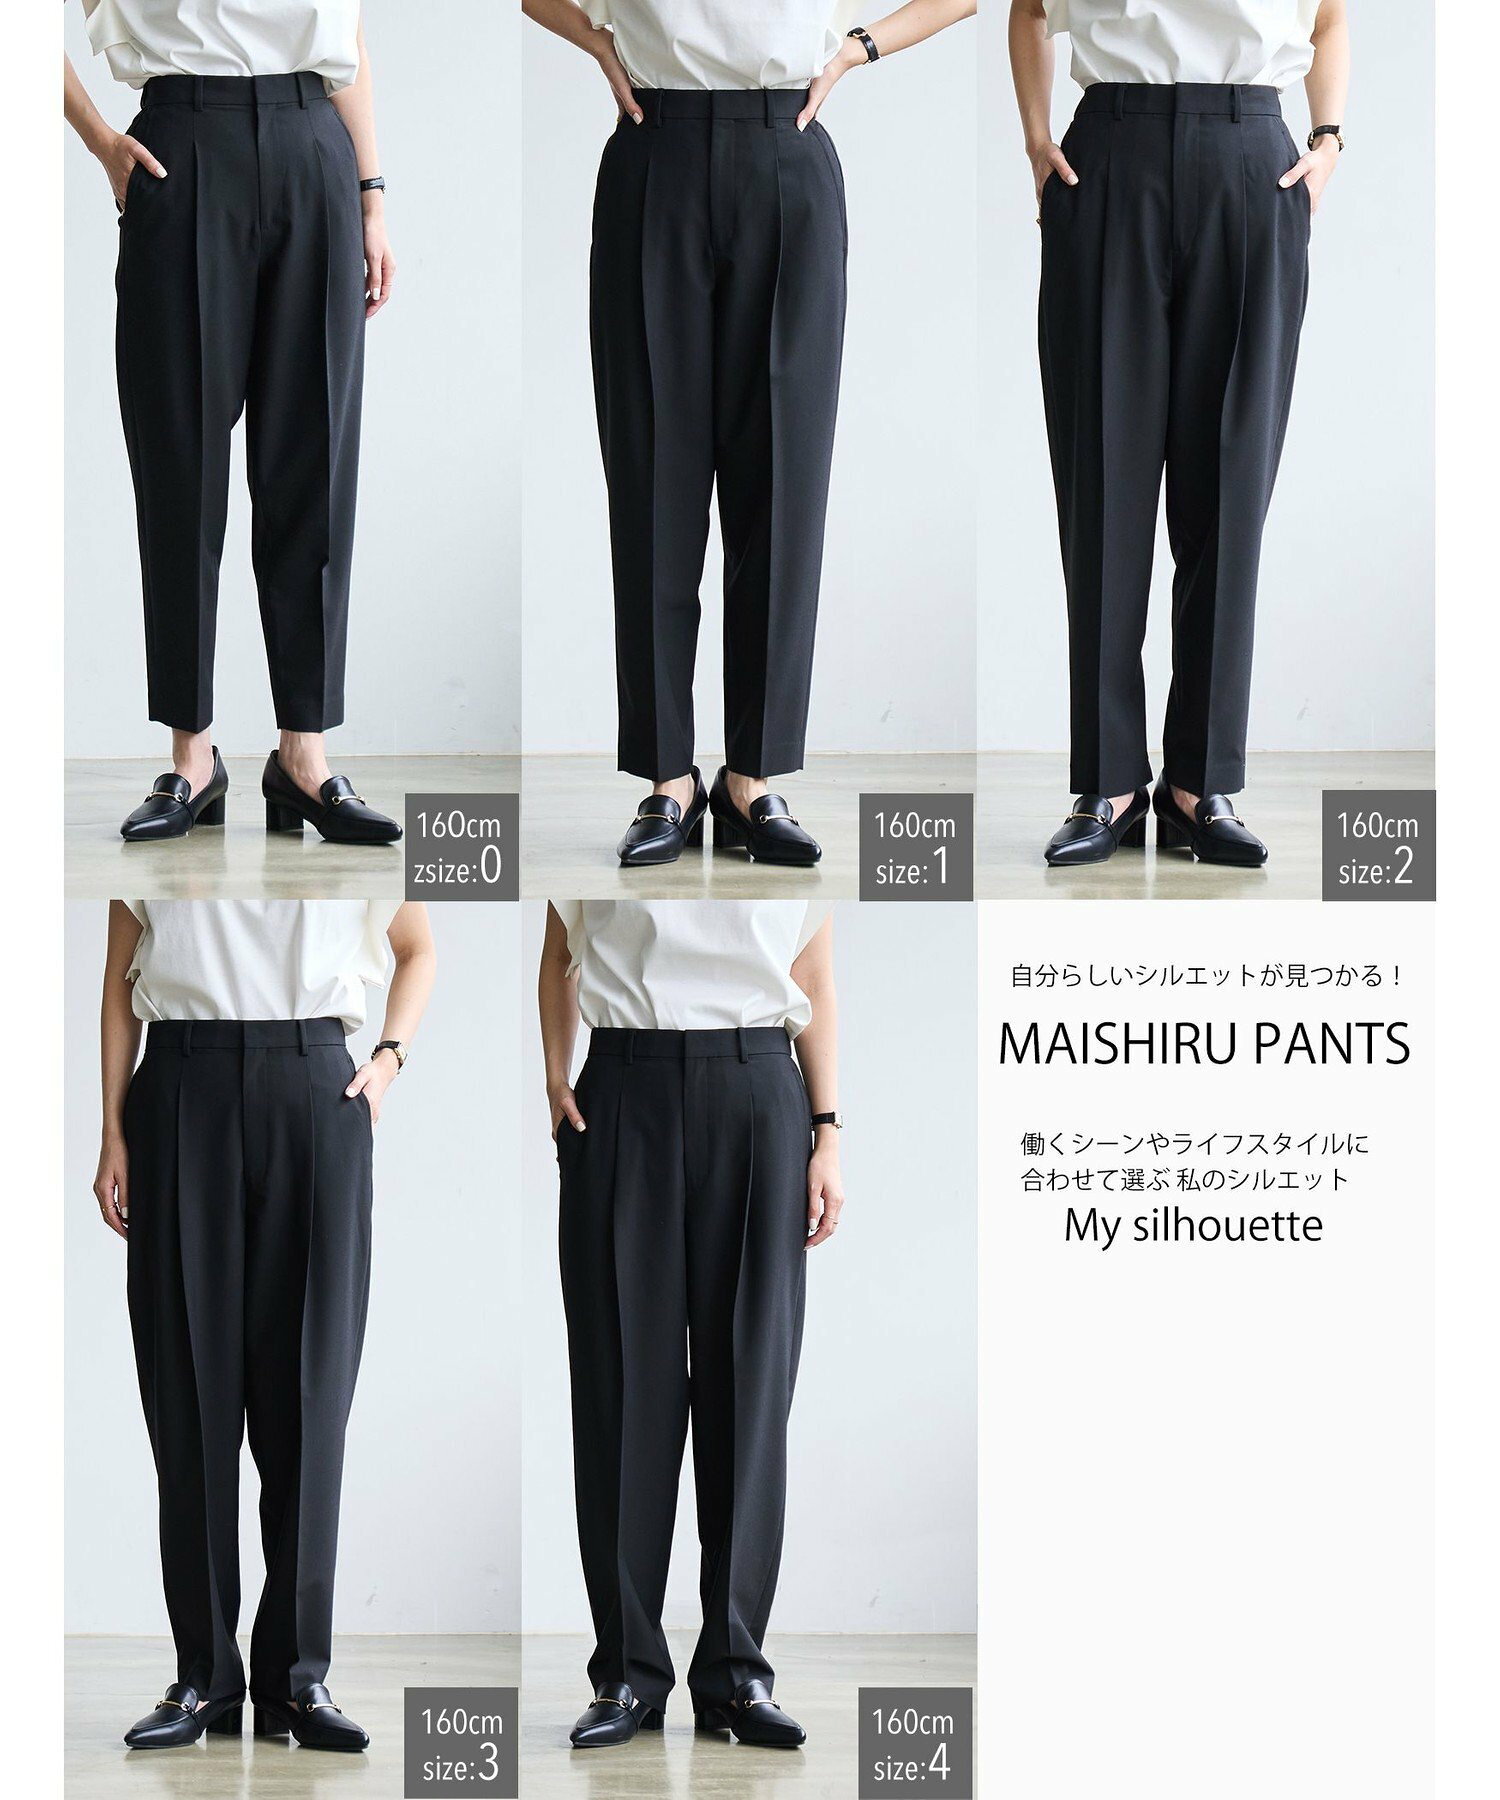 【RONEL】MAISHIRU PANTS(マイシル パンツ)